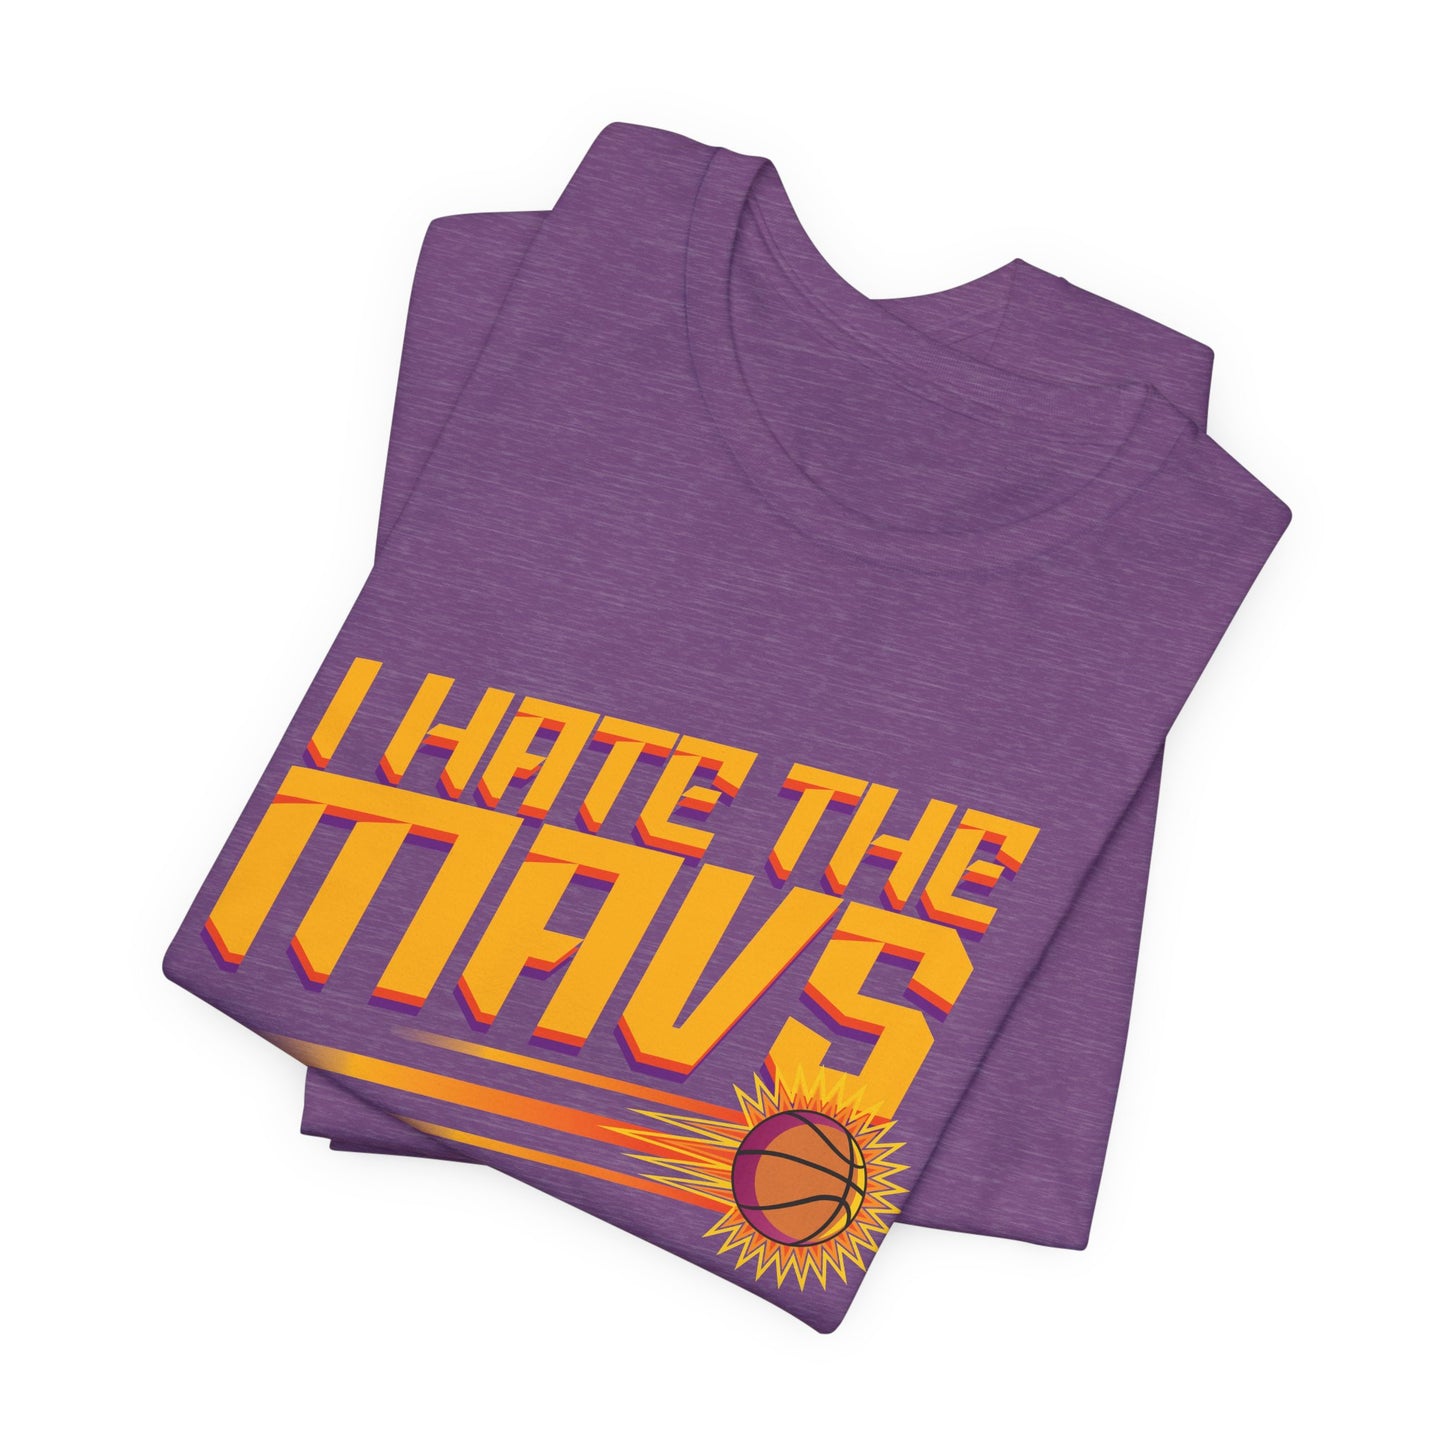 I Hate The Mavz (for Phoenix fans) - Unisex Jersey Short Sleeve Tee